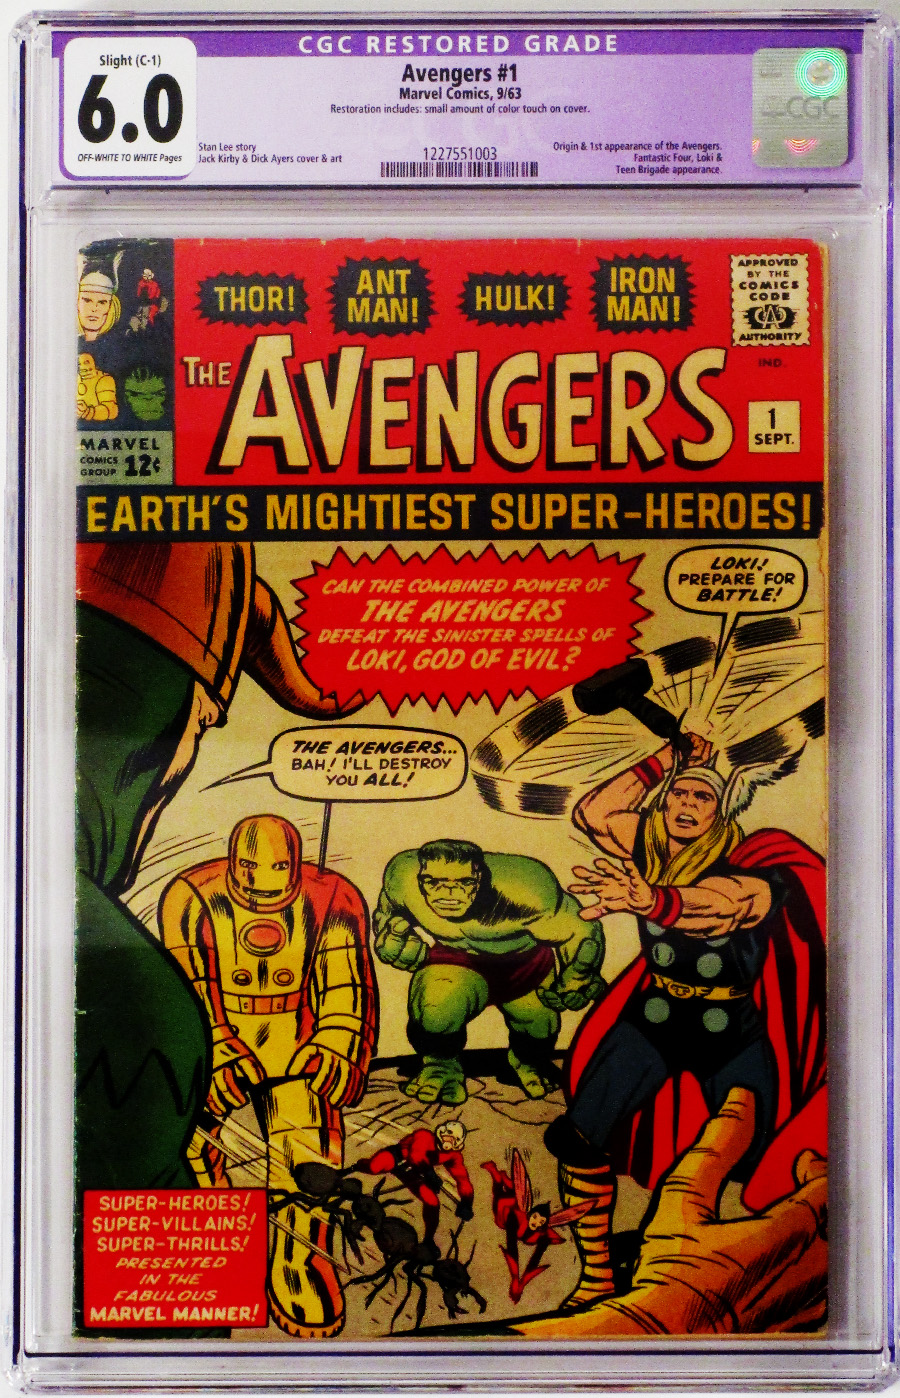 Avengers #1 Cover F CGC Restored 6.0